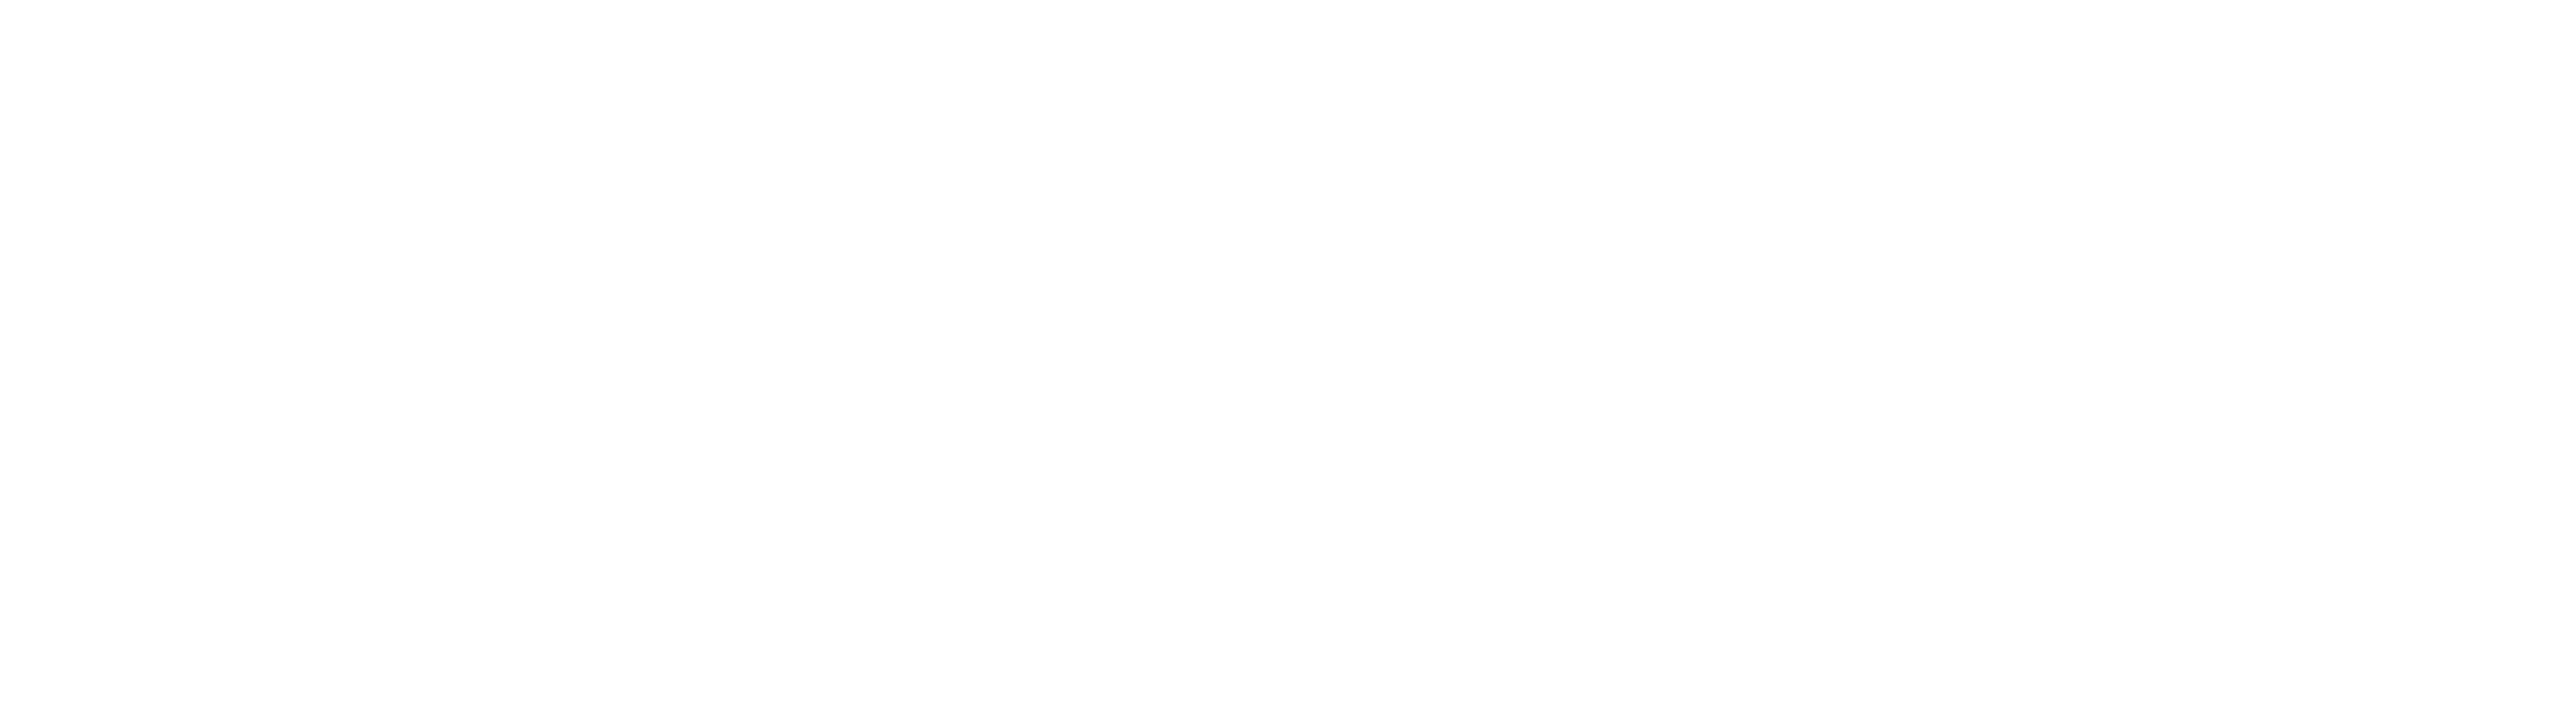 Centroplast Canada